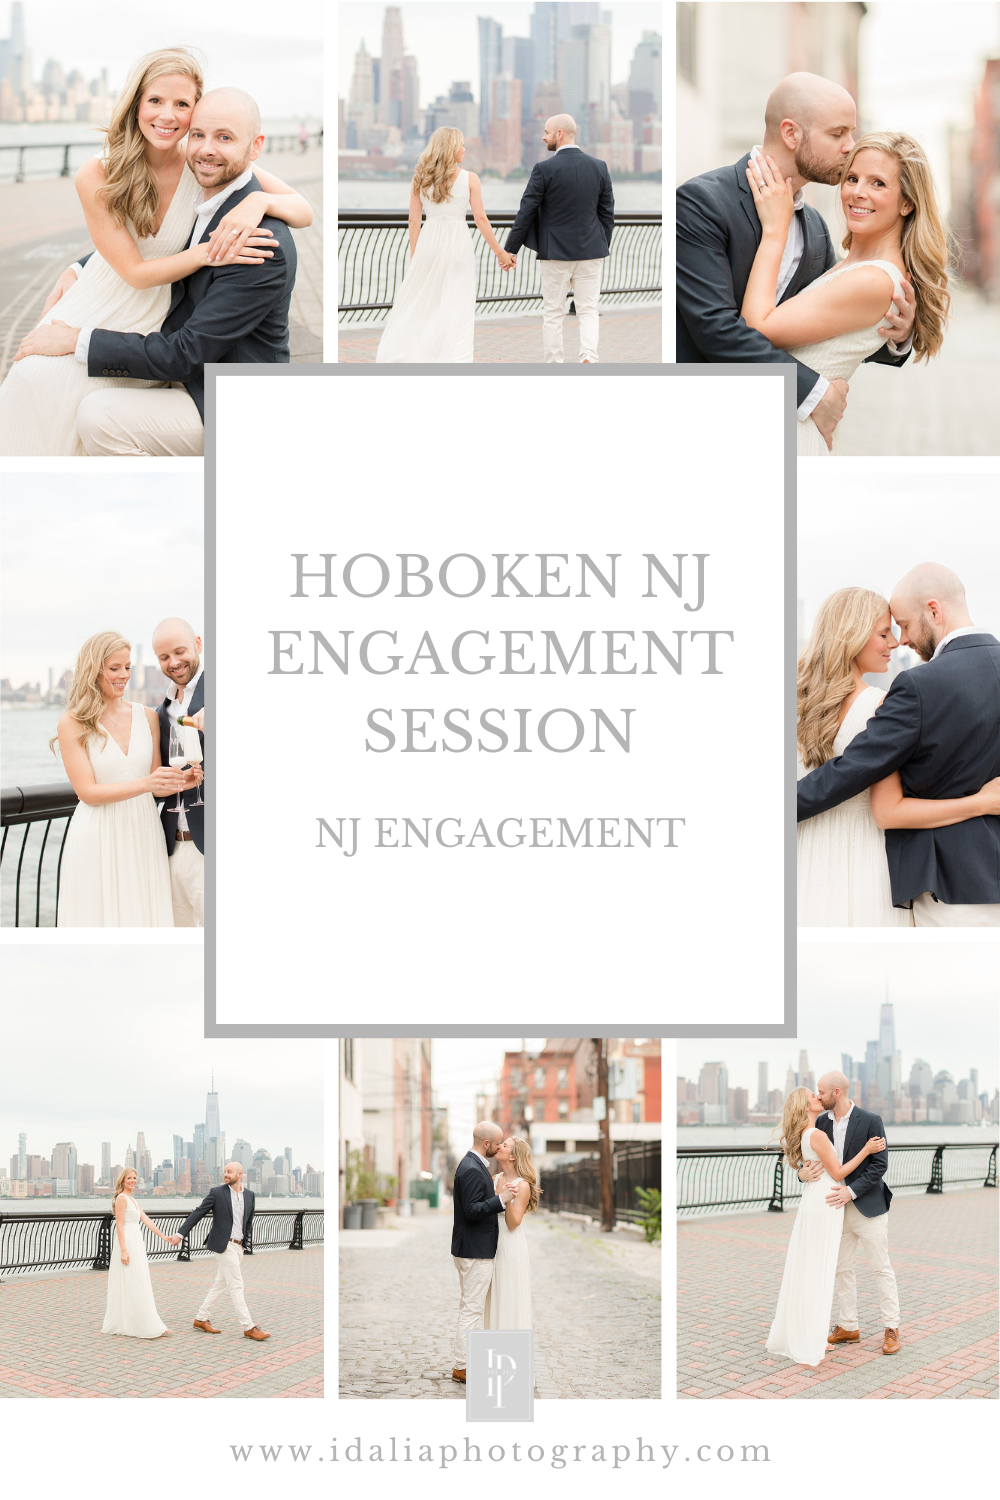 Hoboken NJ engagement session for chic couple